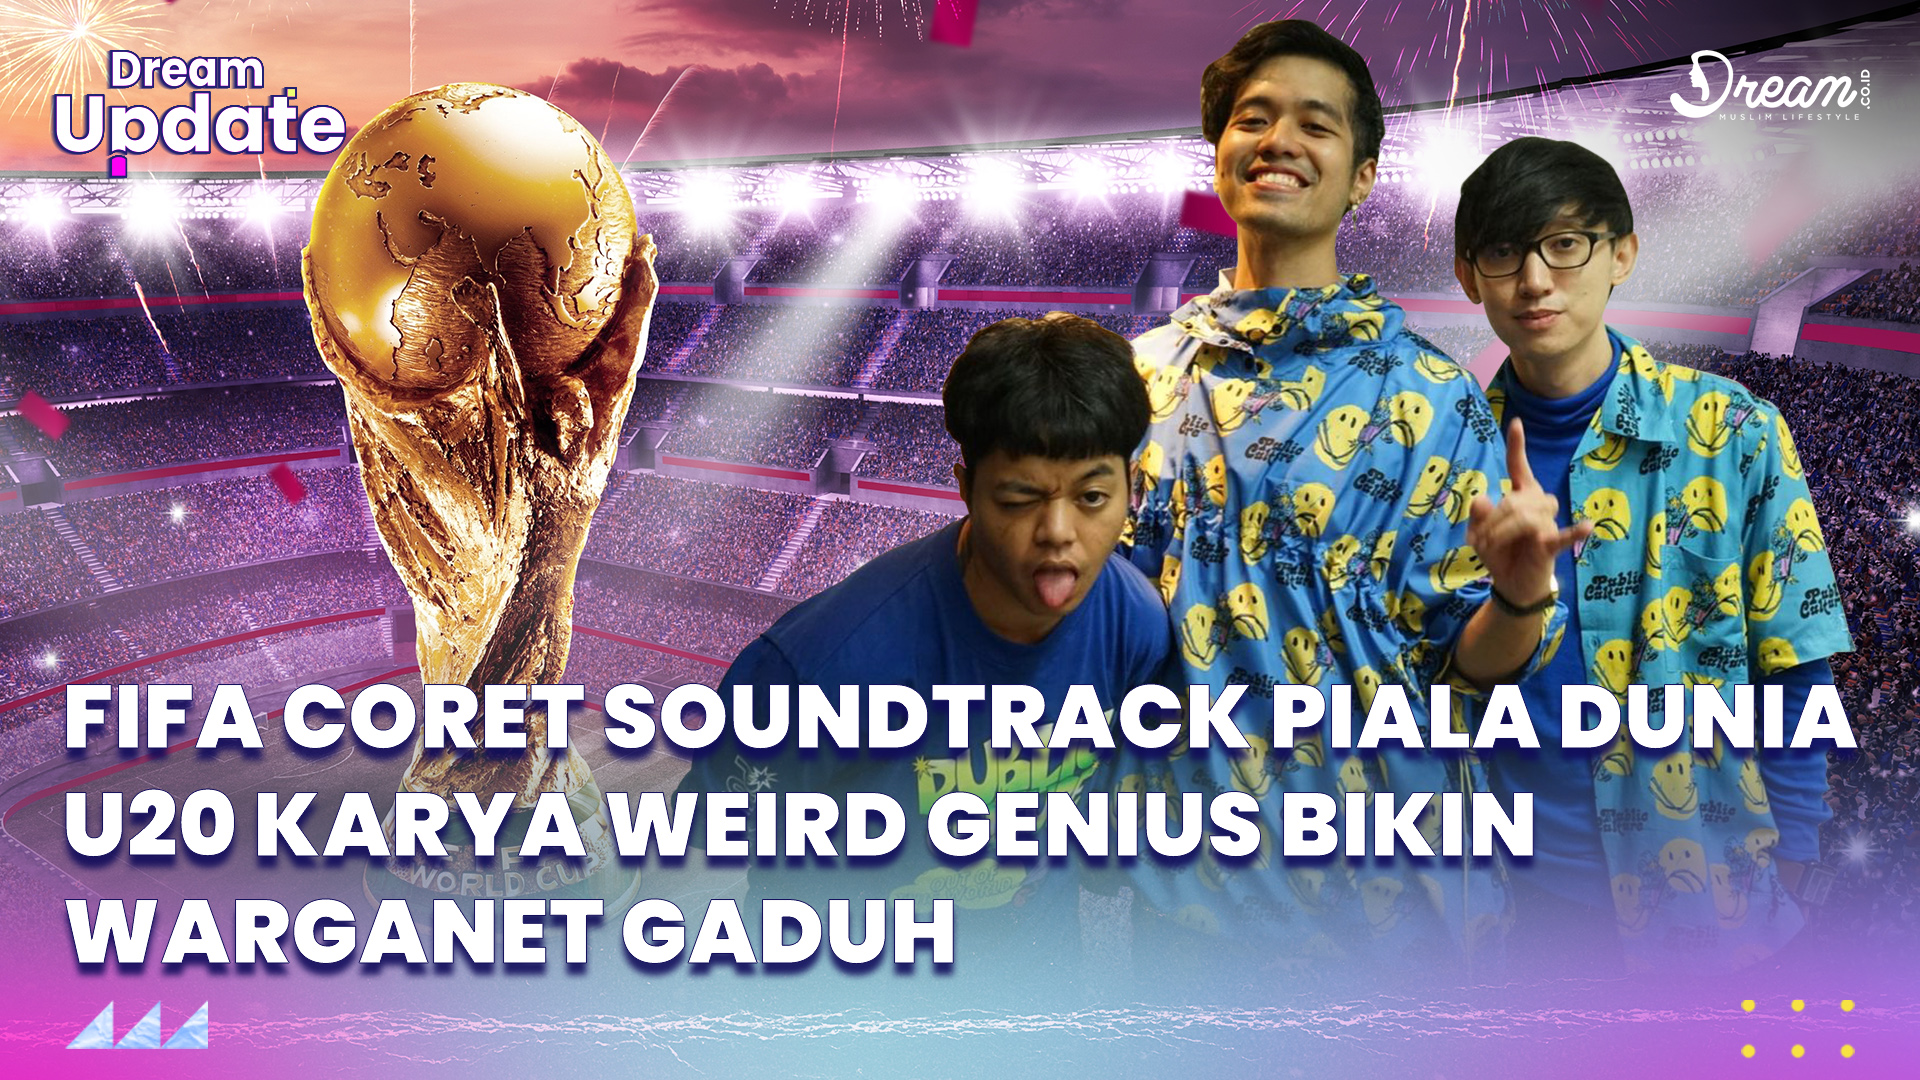 FIFA Coret Soundtrack Piala Dunia U20 Karya Weird Genius, Bikin Warganet Gaduh